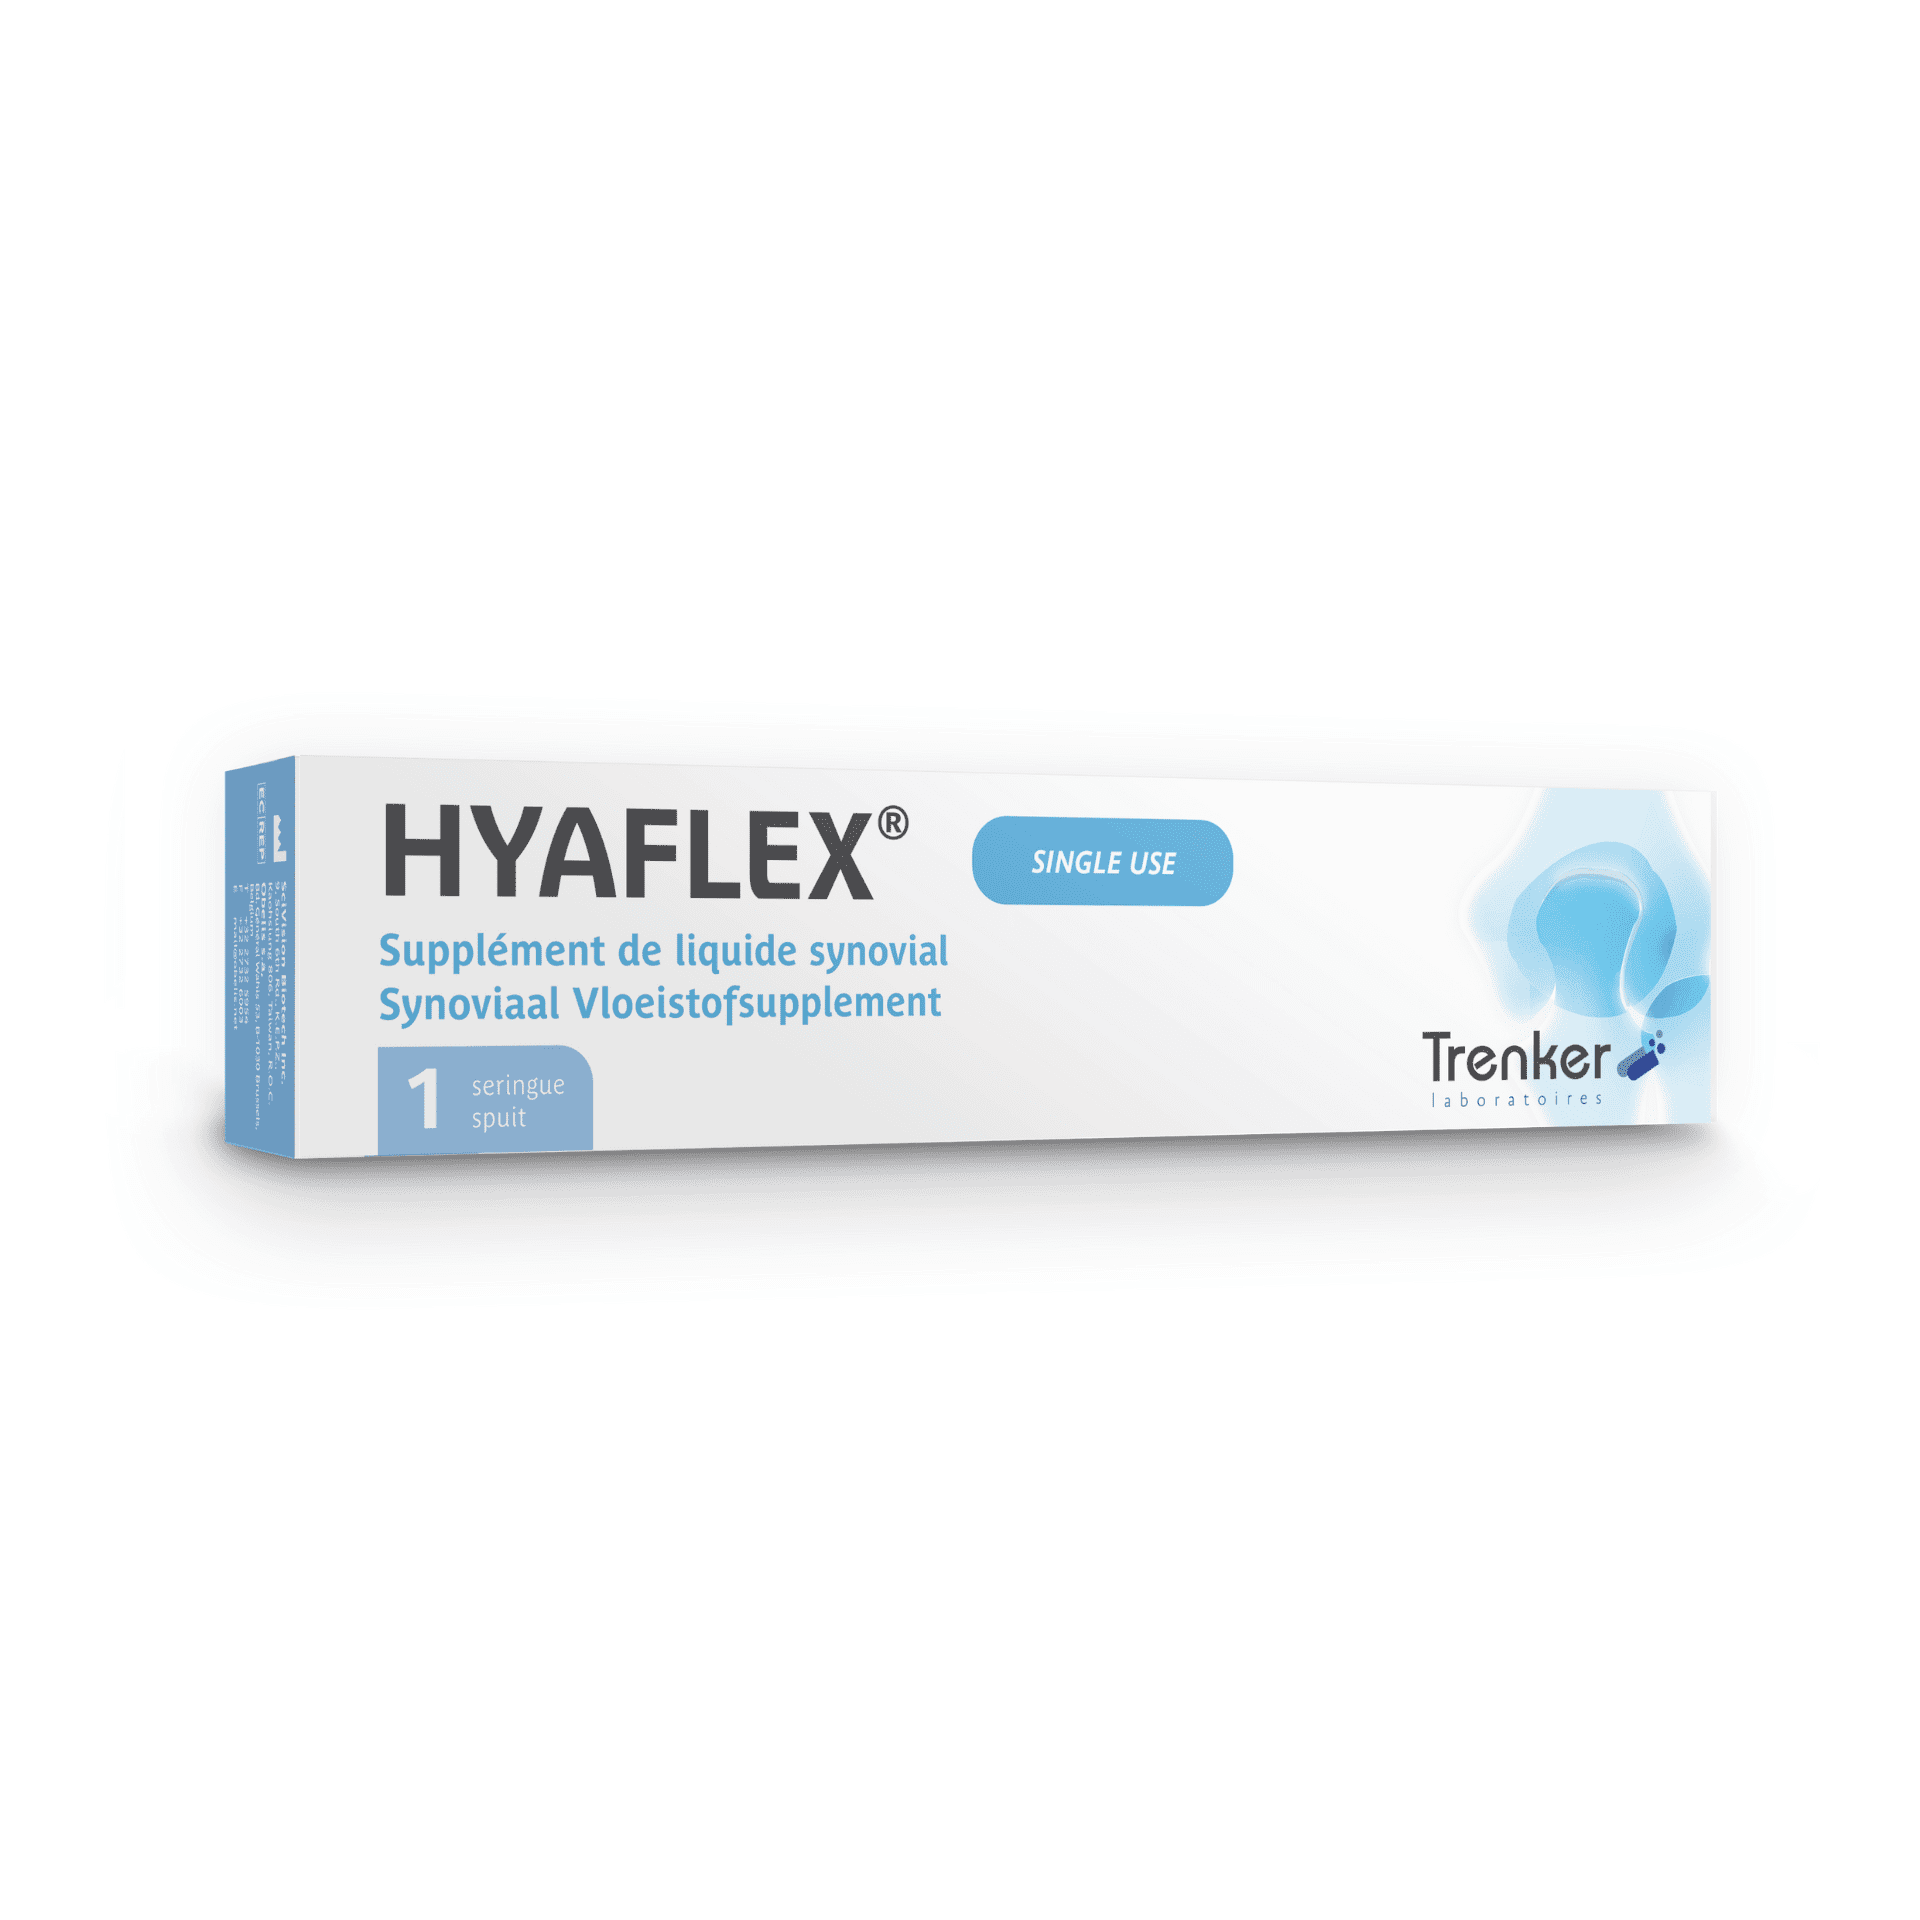 Hyaflex